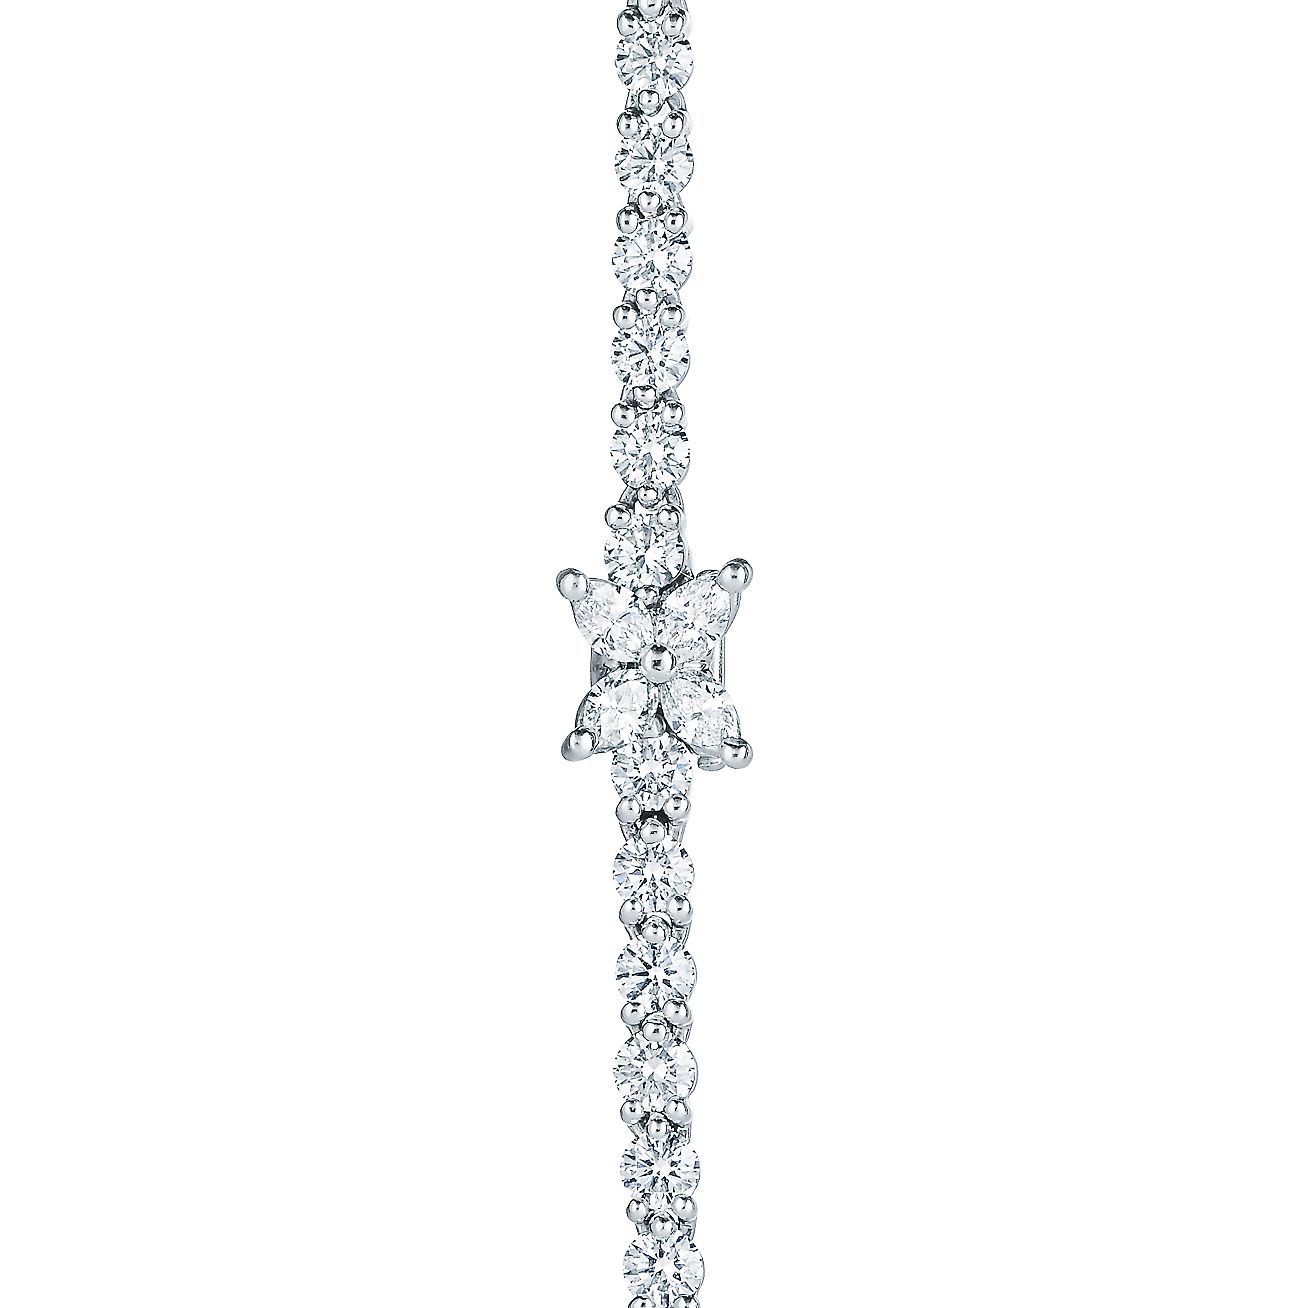 Tiffany Victoria™ graduated line necklace in platinum with diamonds.